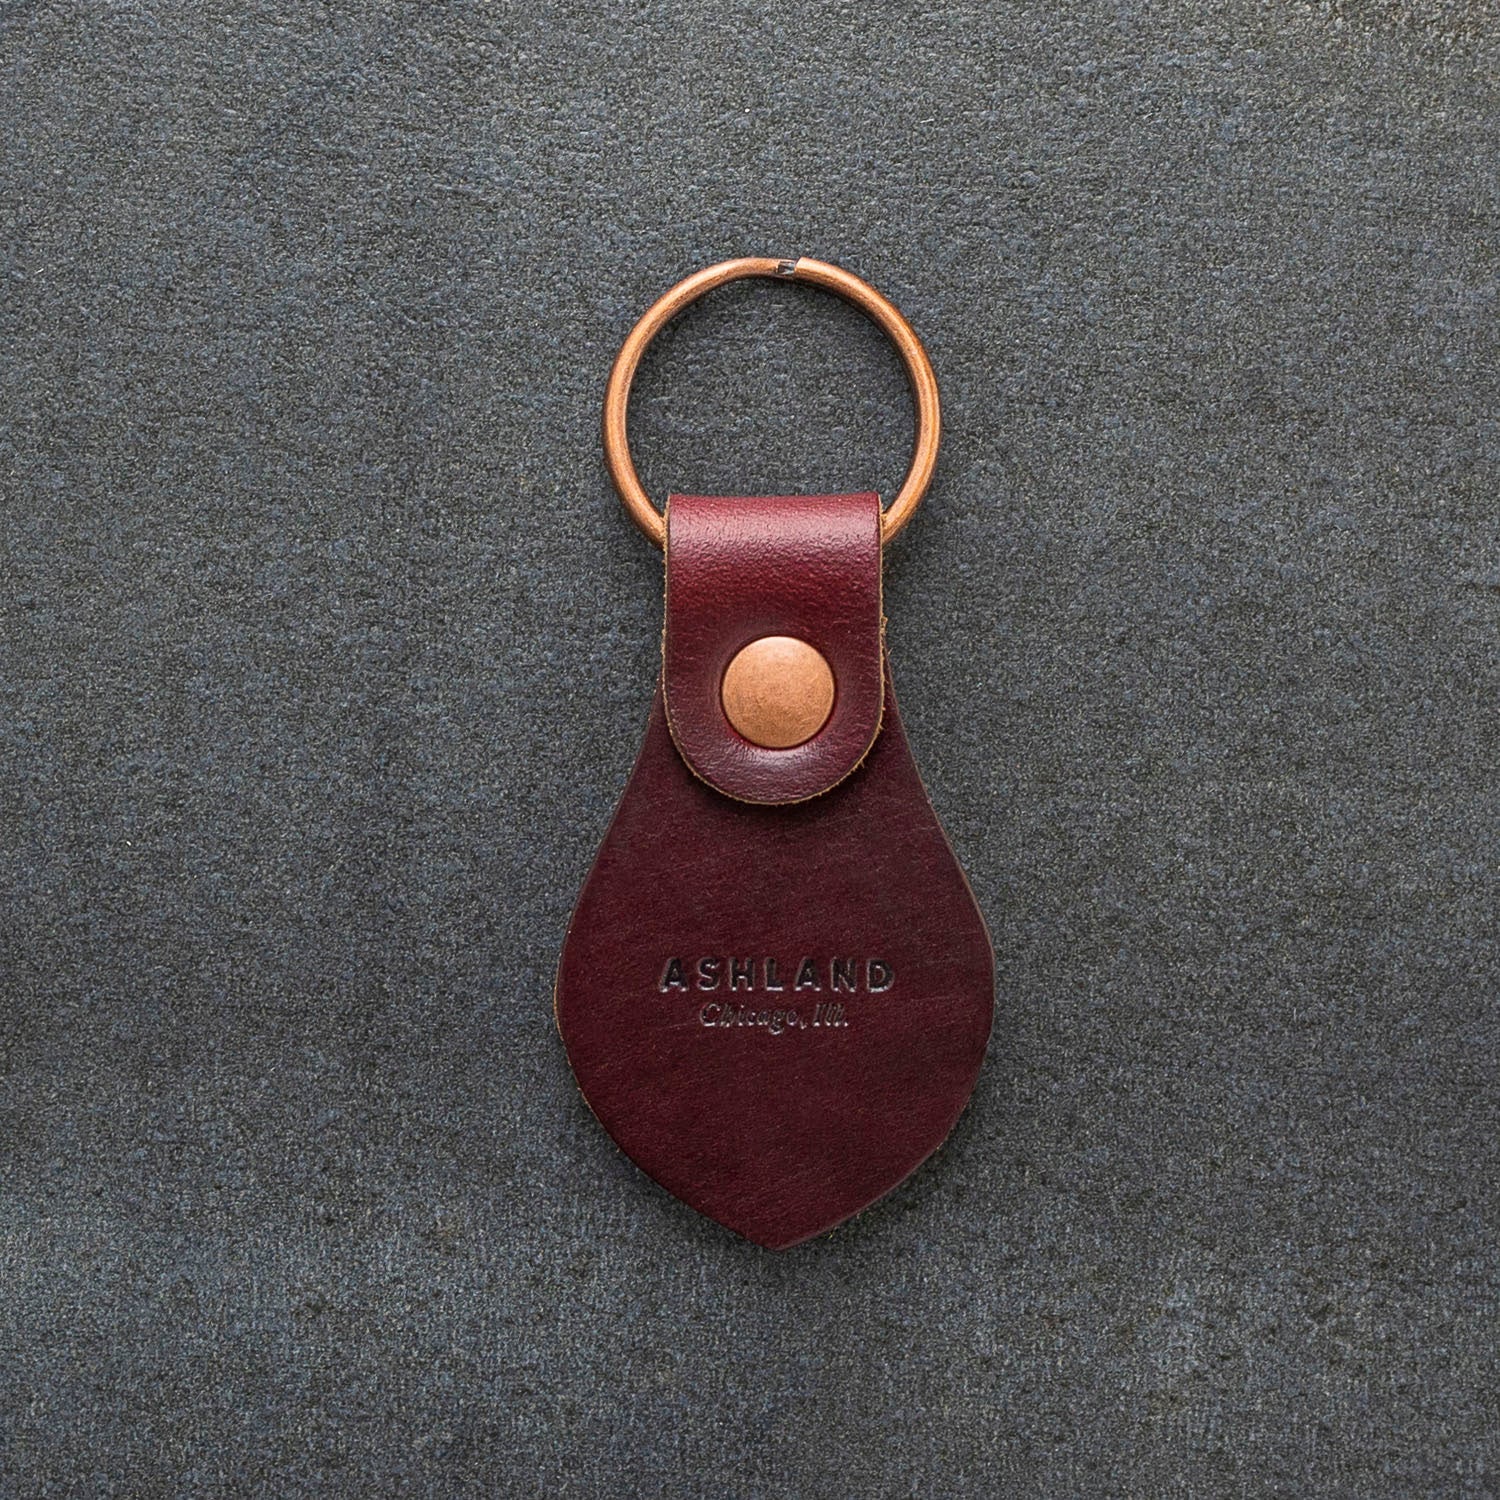 Impressive Leather Keychain Designs For Keys